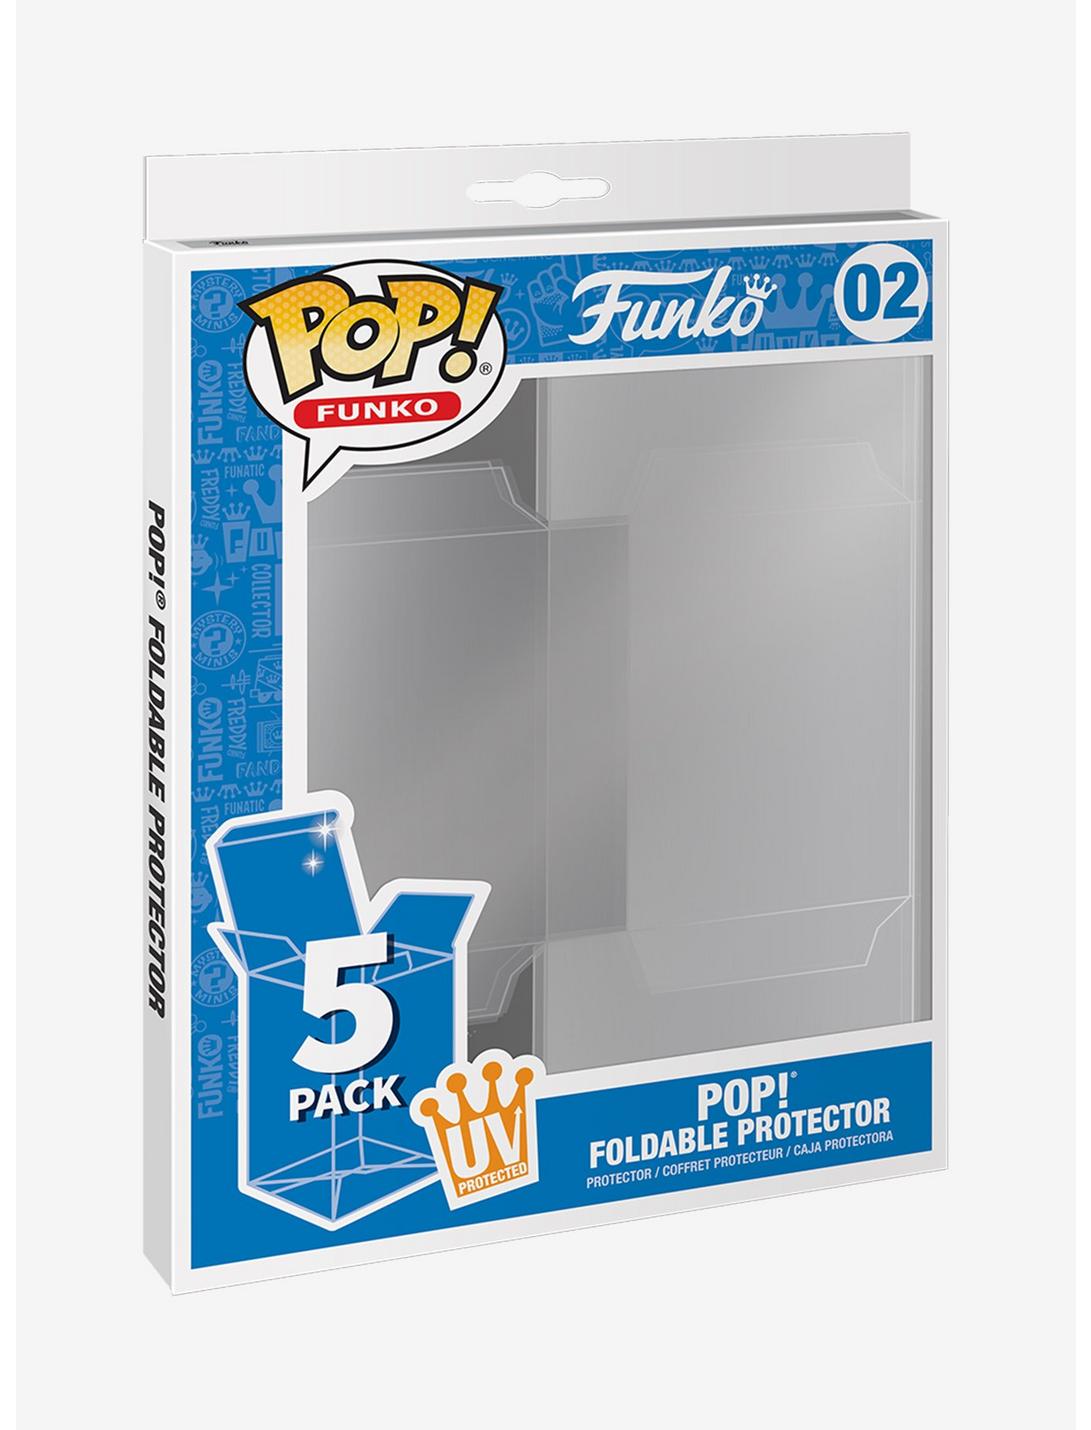 Funko Pop! Foldable Protector 5 Pack, , hi-res